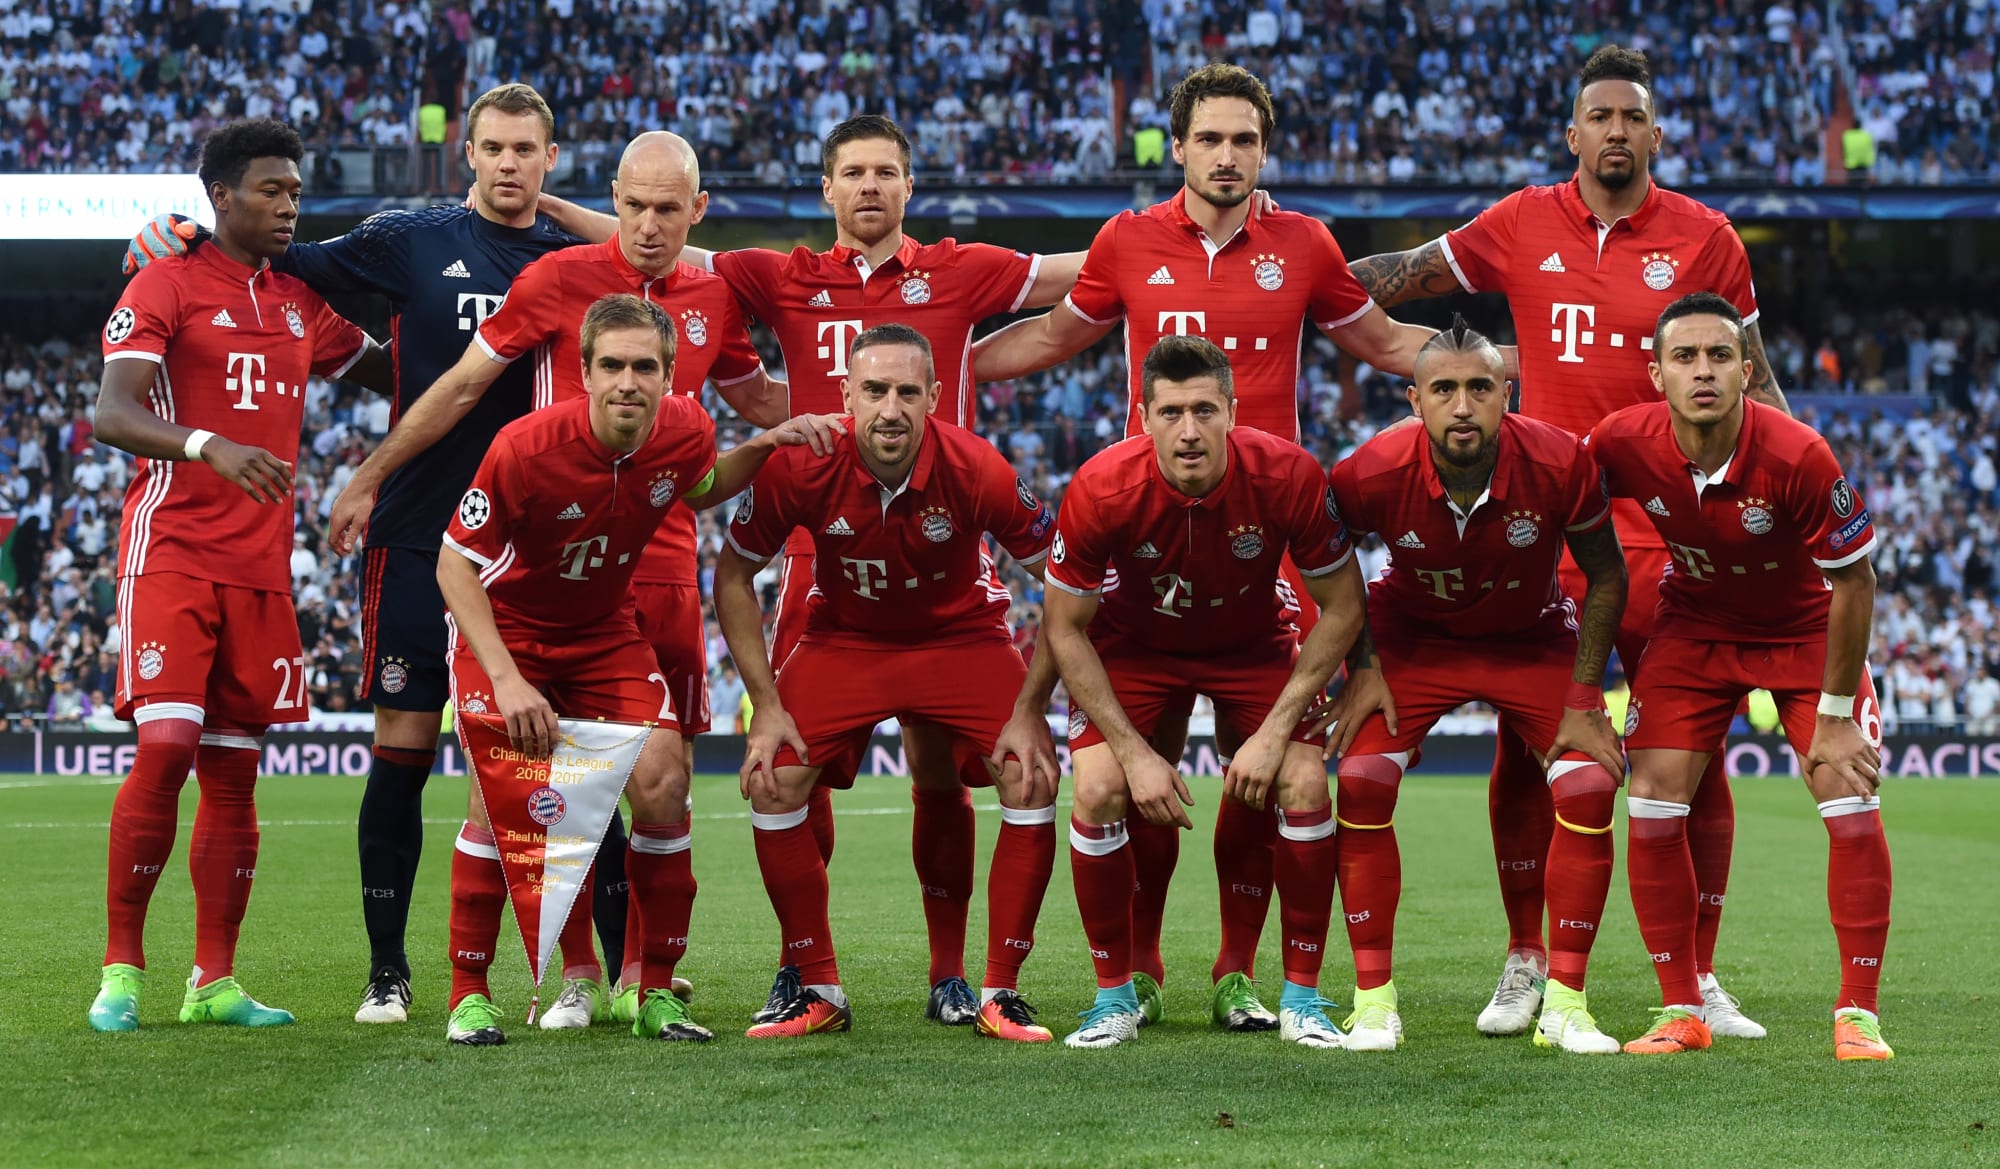 Bayern Munich squad power rankings - May (End of season